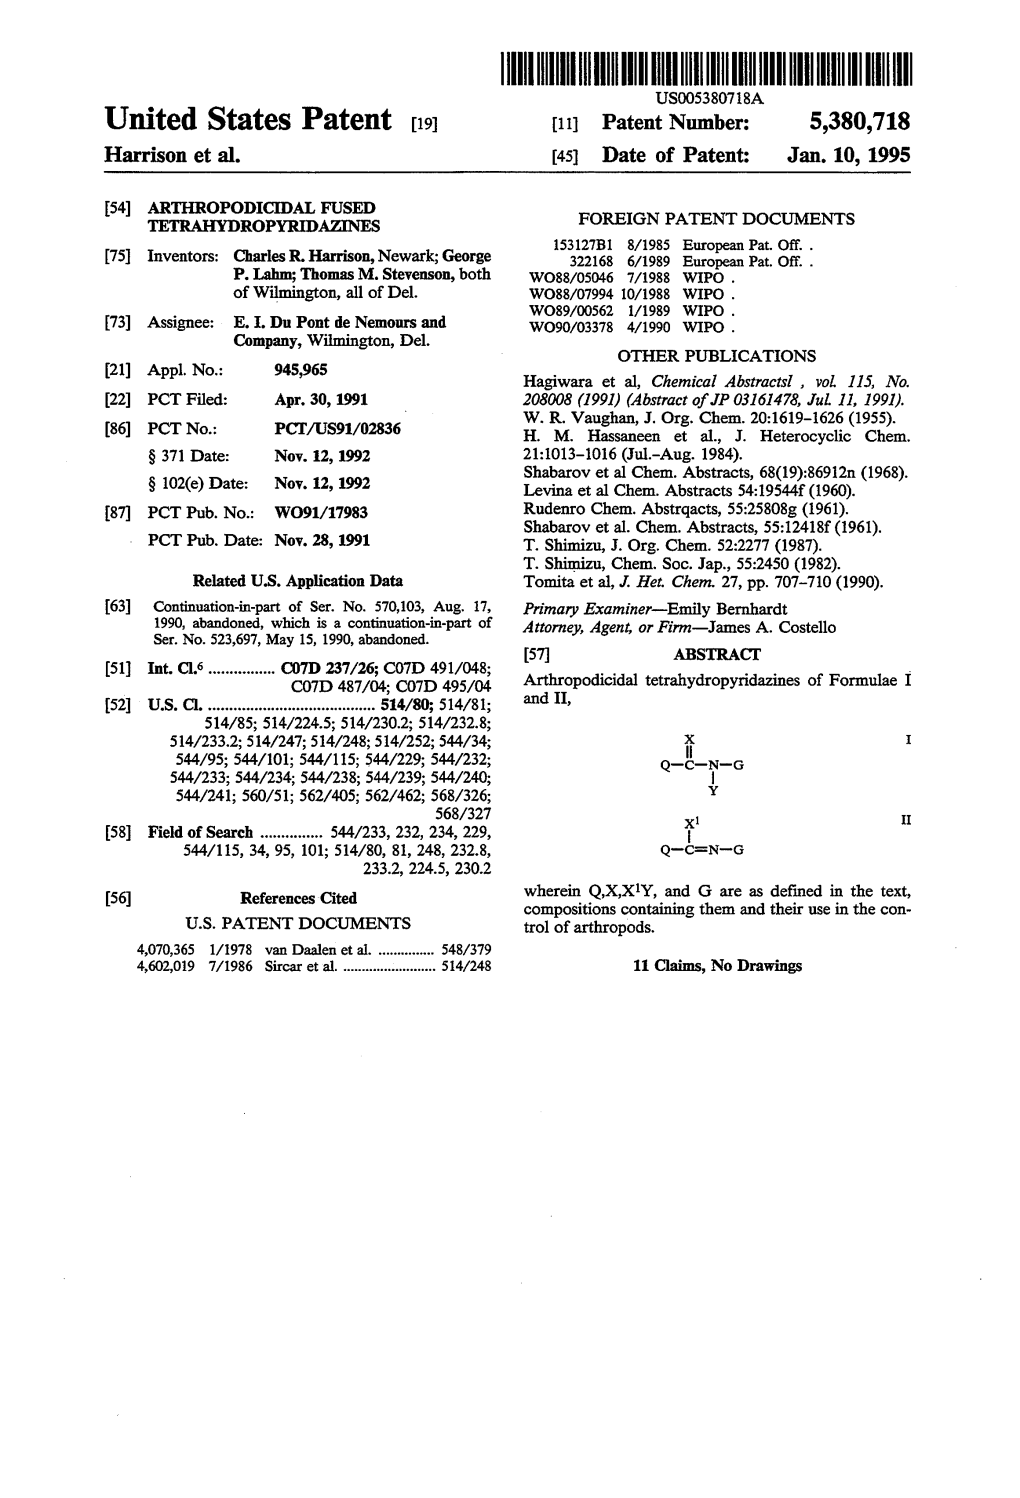 United States Patent 19 11 Patent Number: 5,380,718 Harrison Et Al